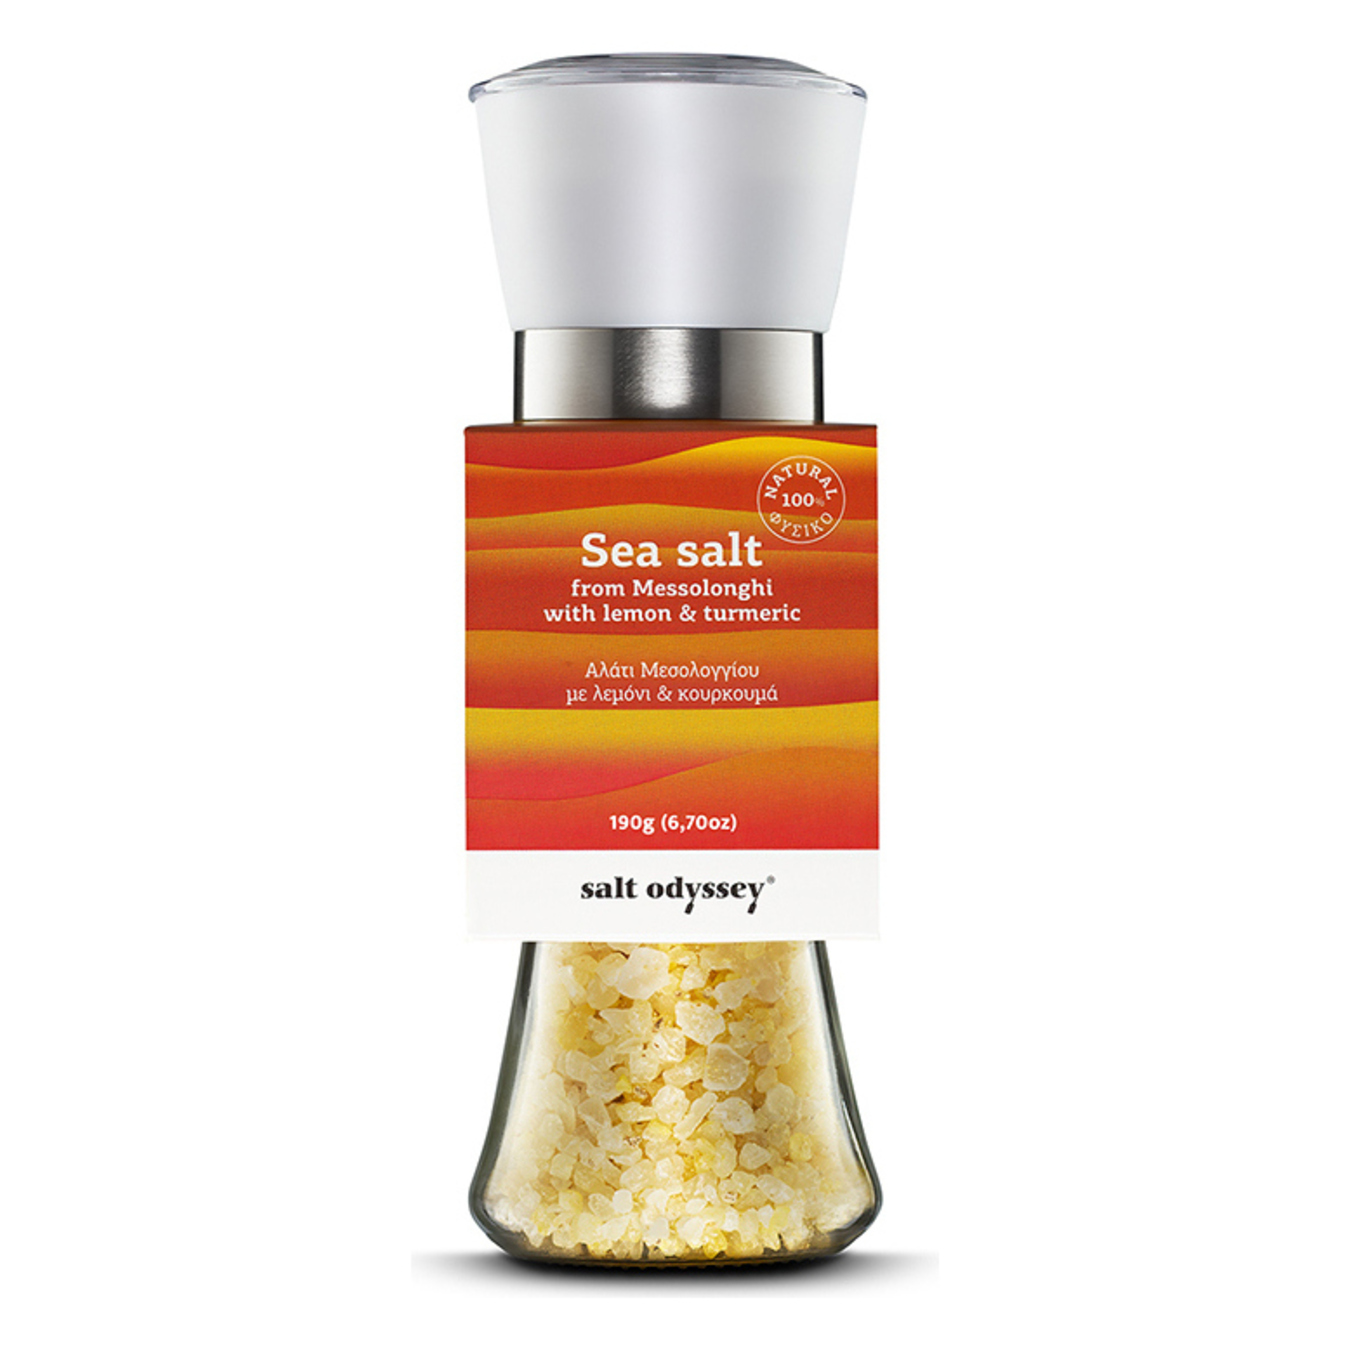 Sea Salt Salt Odyssey With Turmeric And Lemon In Grinder 190g